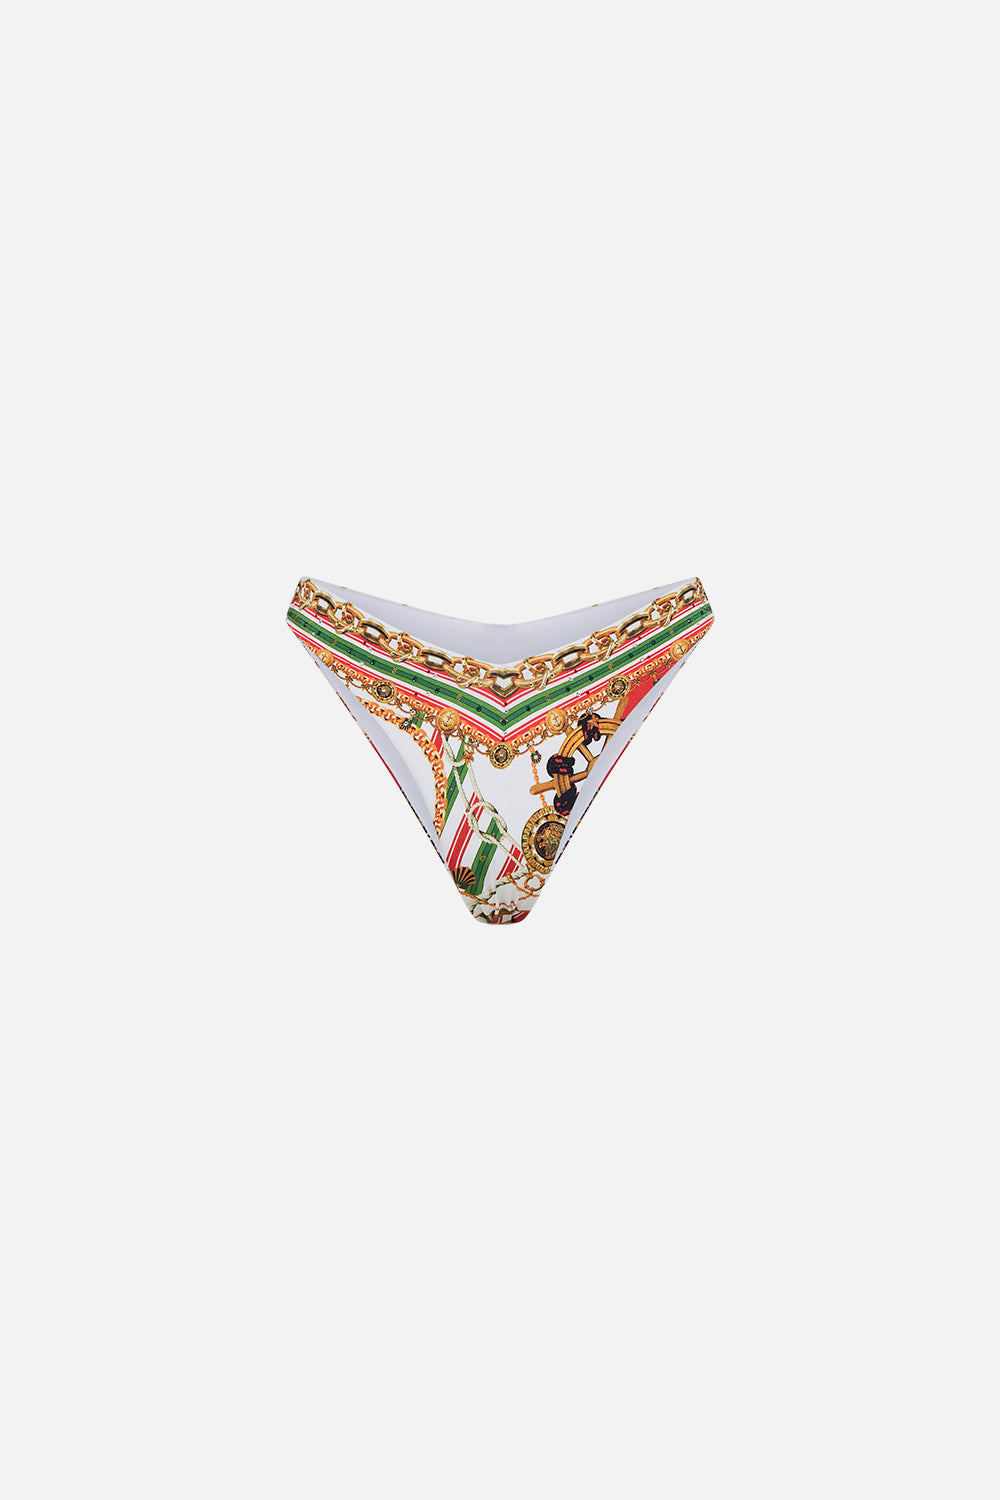 Product view of CAMILLA designer bikini bottom in Saluti Summertime print 